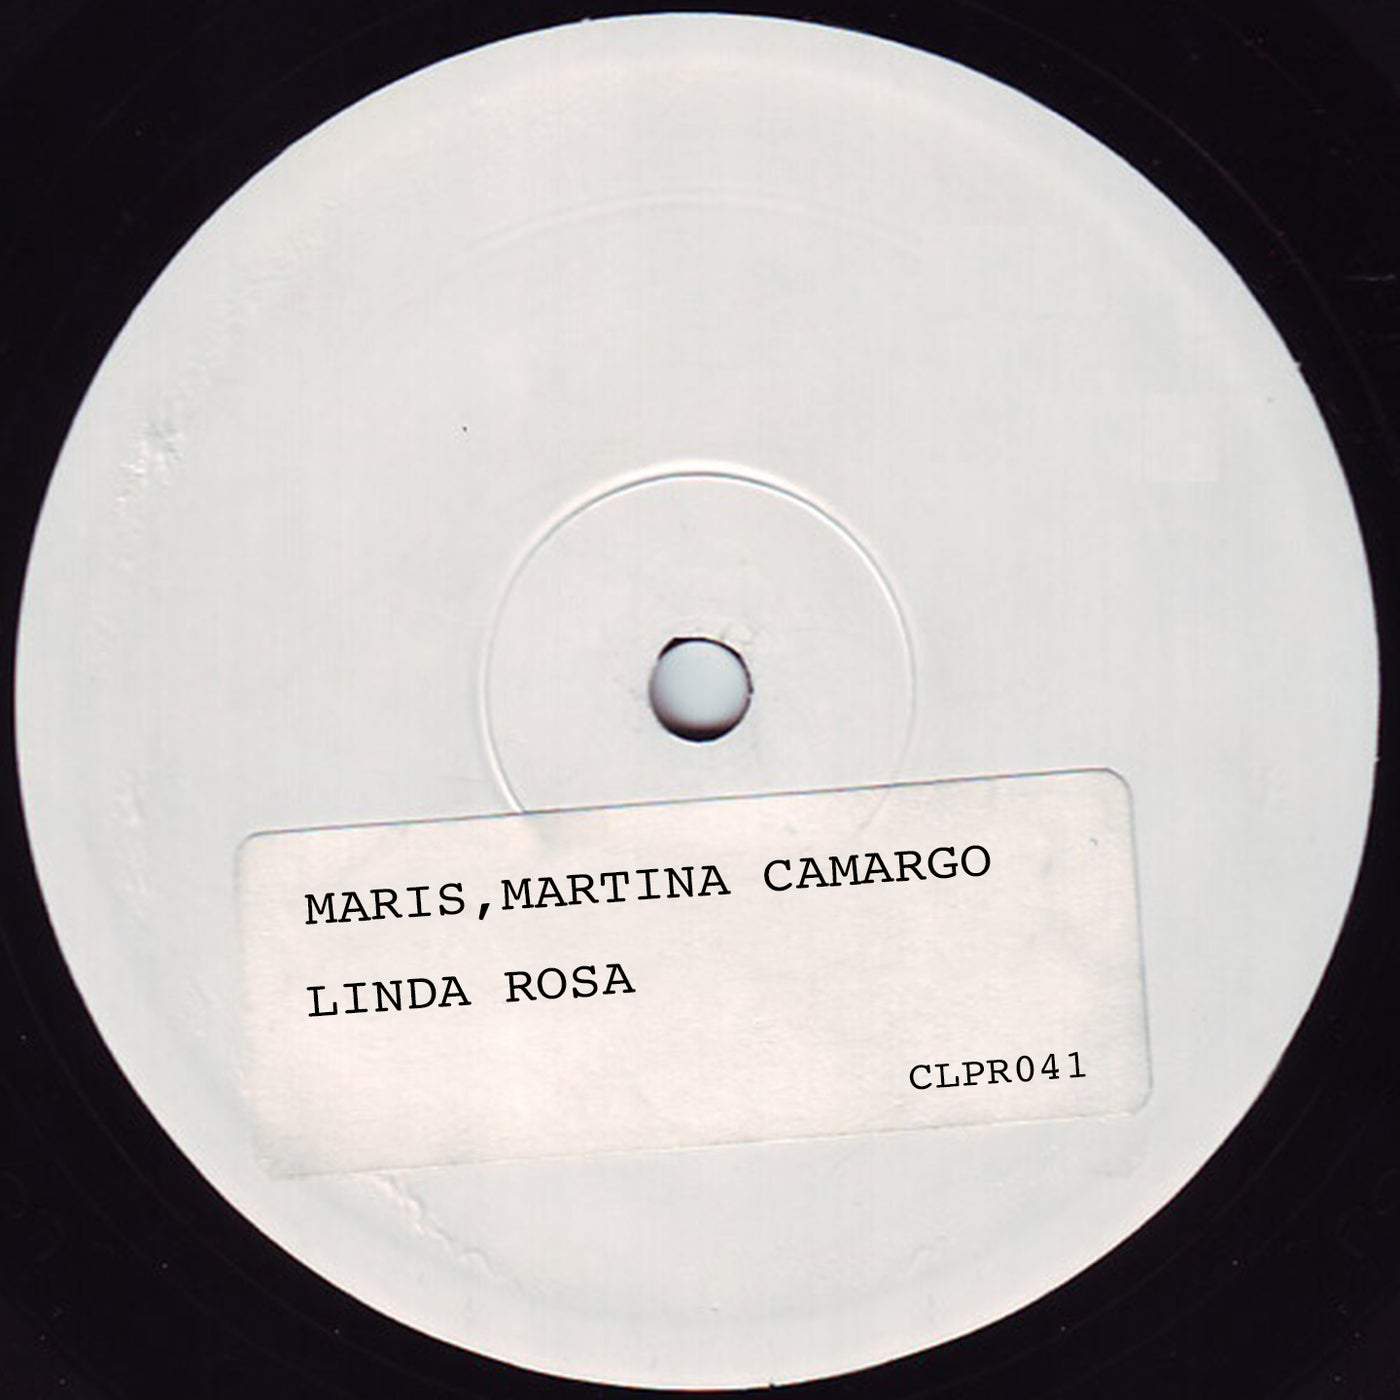 Release Cover: Maris, Martina Camargo - Linda Rosa on Electrobuzz